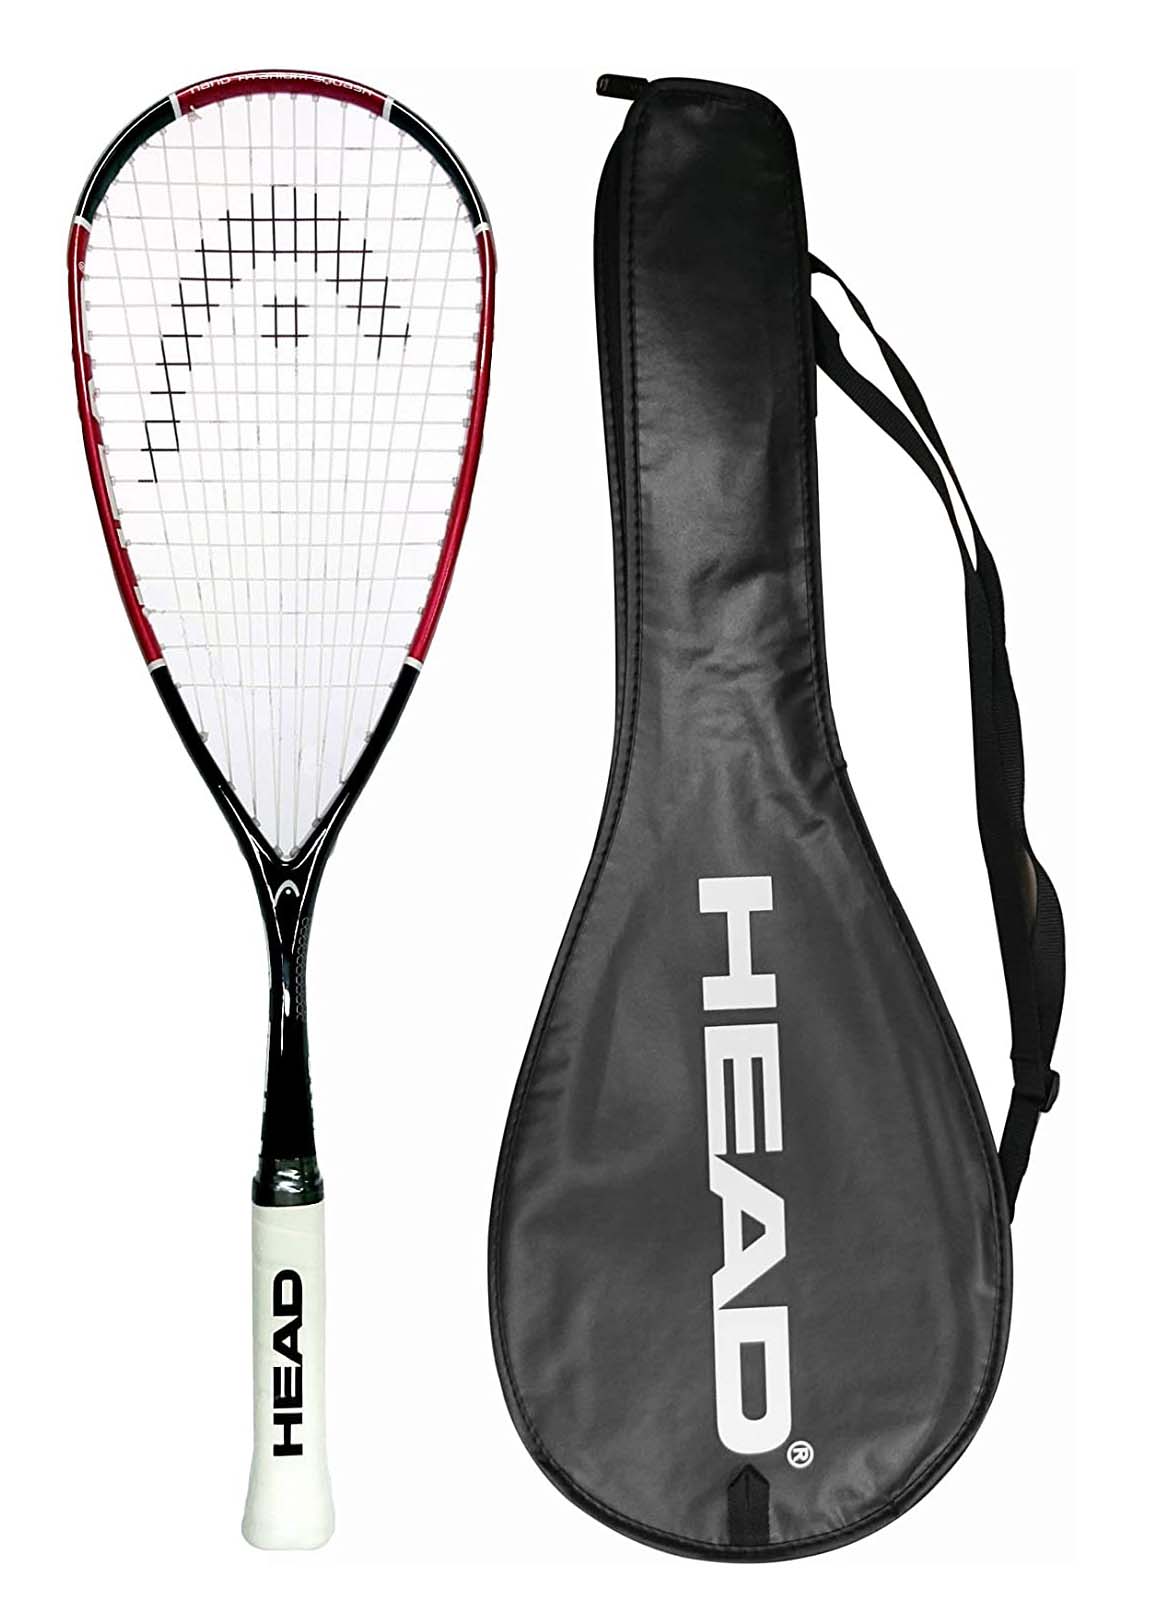 Best Squash Racquet For Intermediate Player